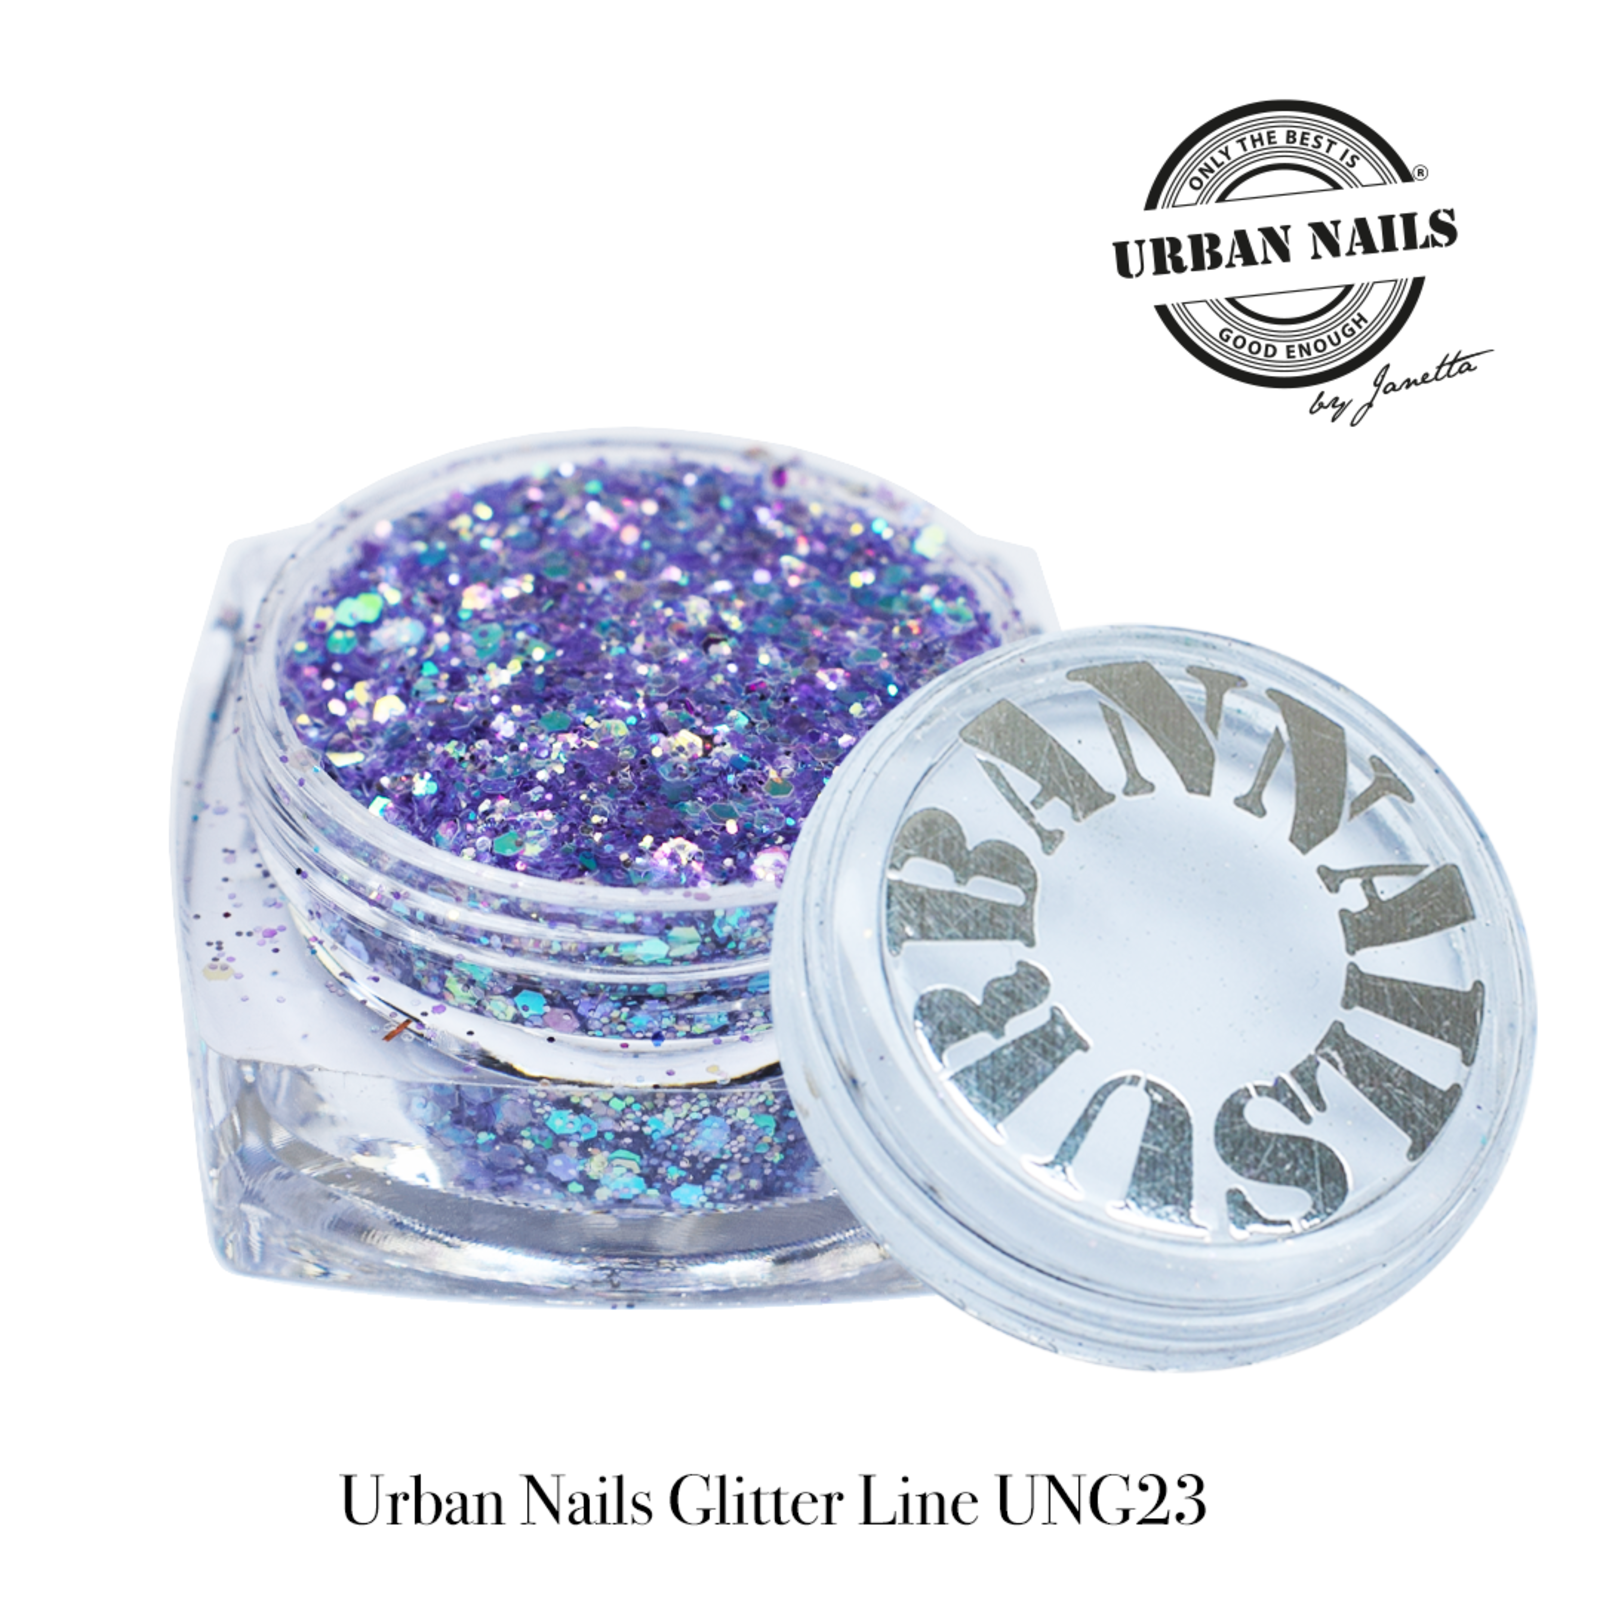 Urban nails Glitter Line UNG23